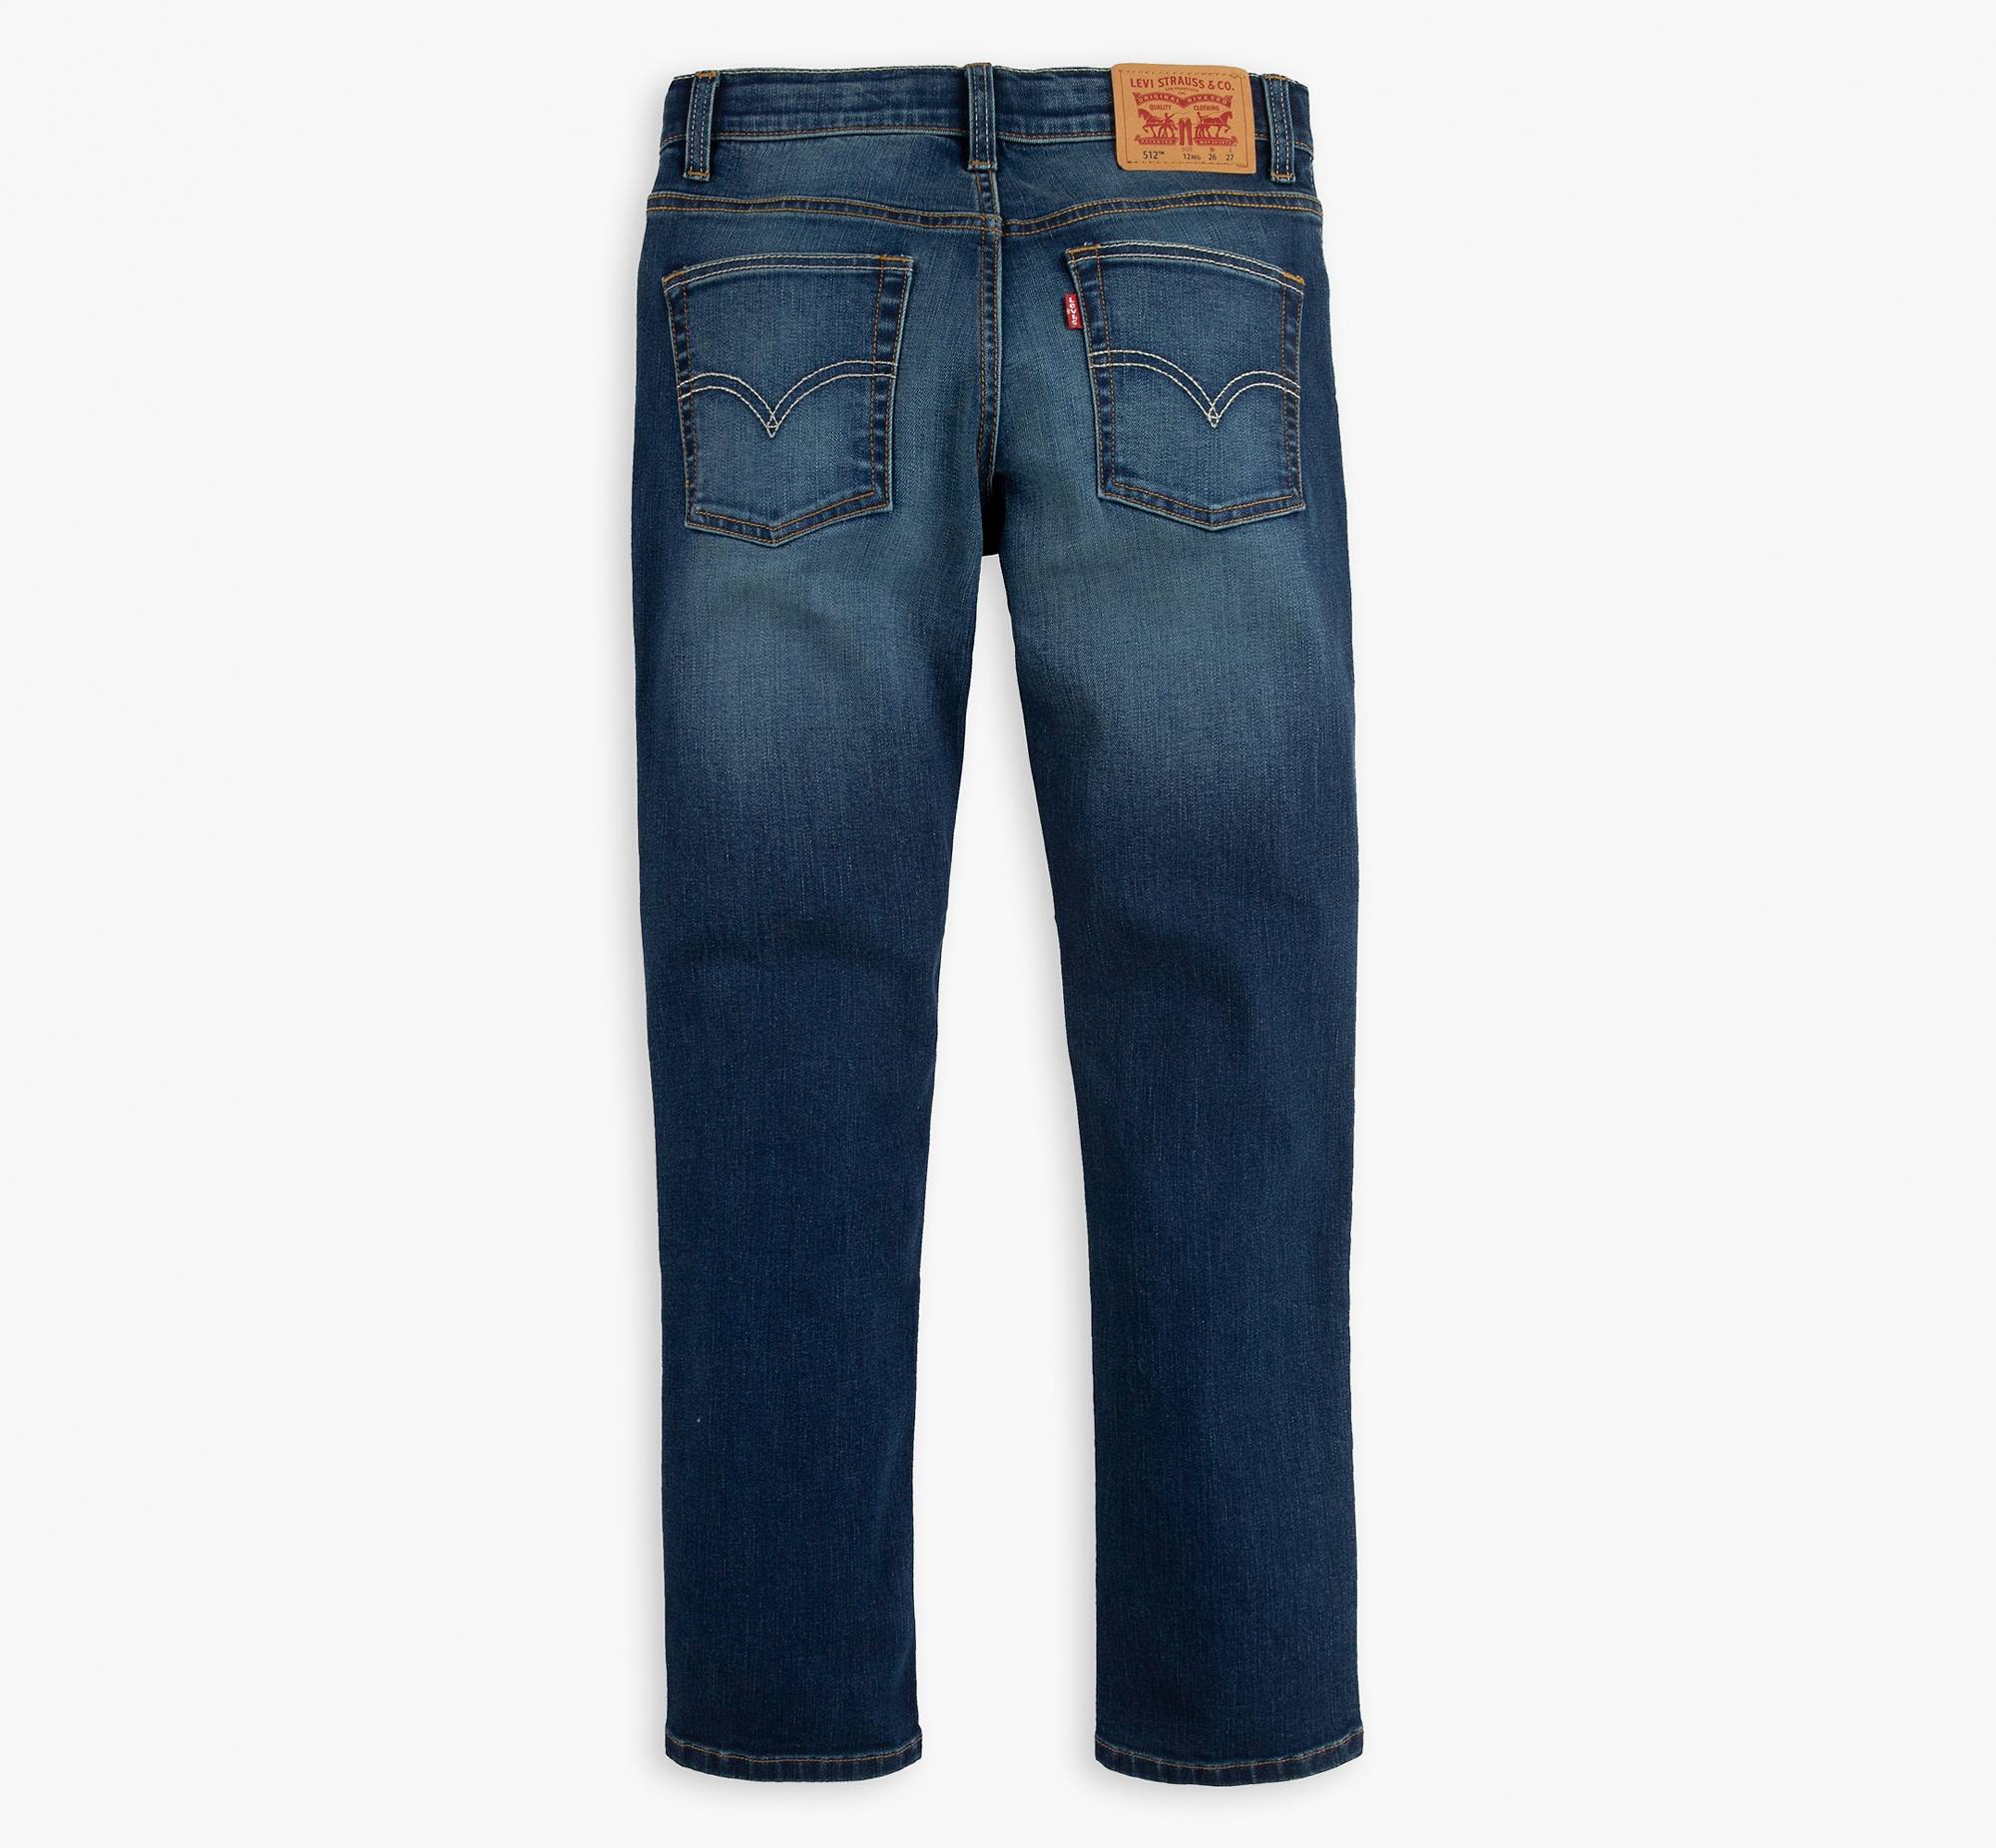 512™ Slim Taper Big Boys Performance Jeans 8-20 - Medium Wash | Levi's® US